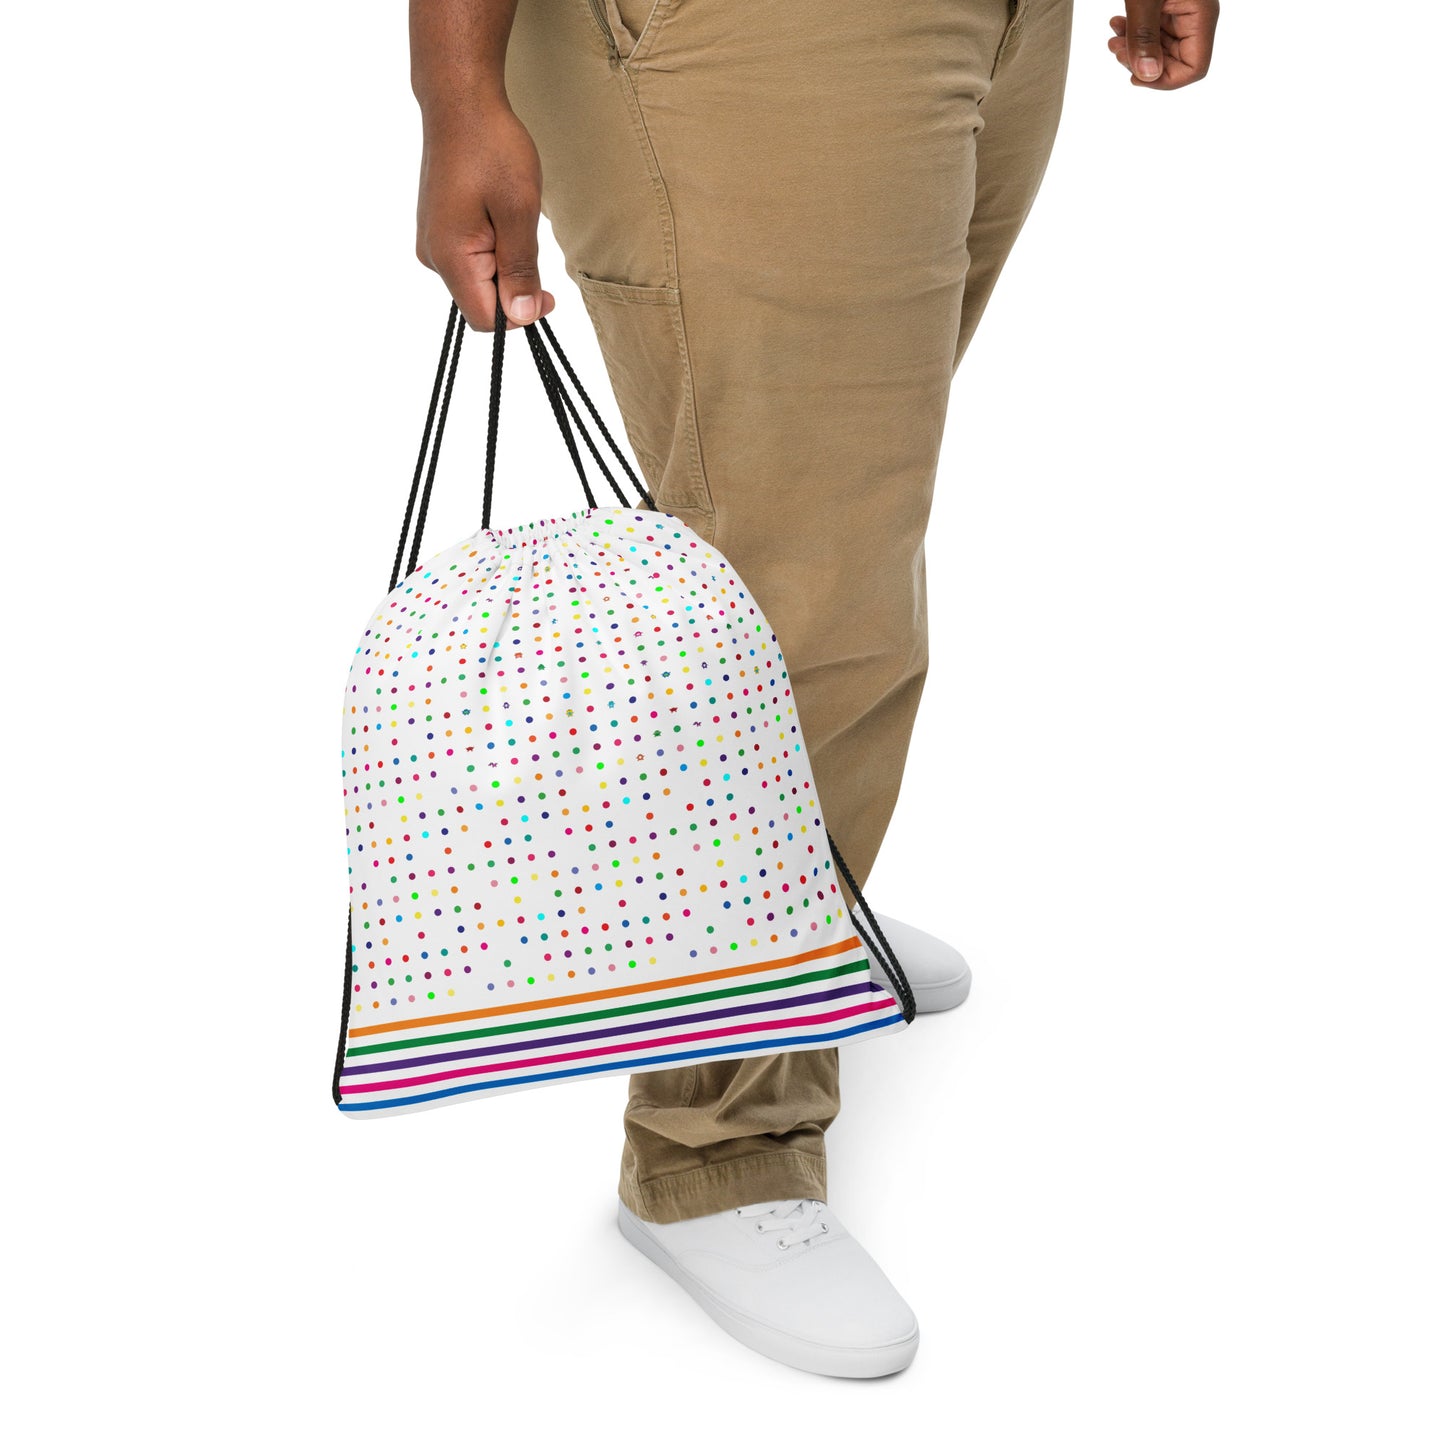 Mini Dot white Drawstring bag striped bottom man carrying